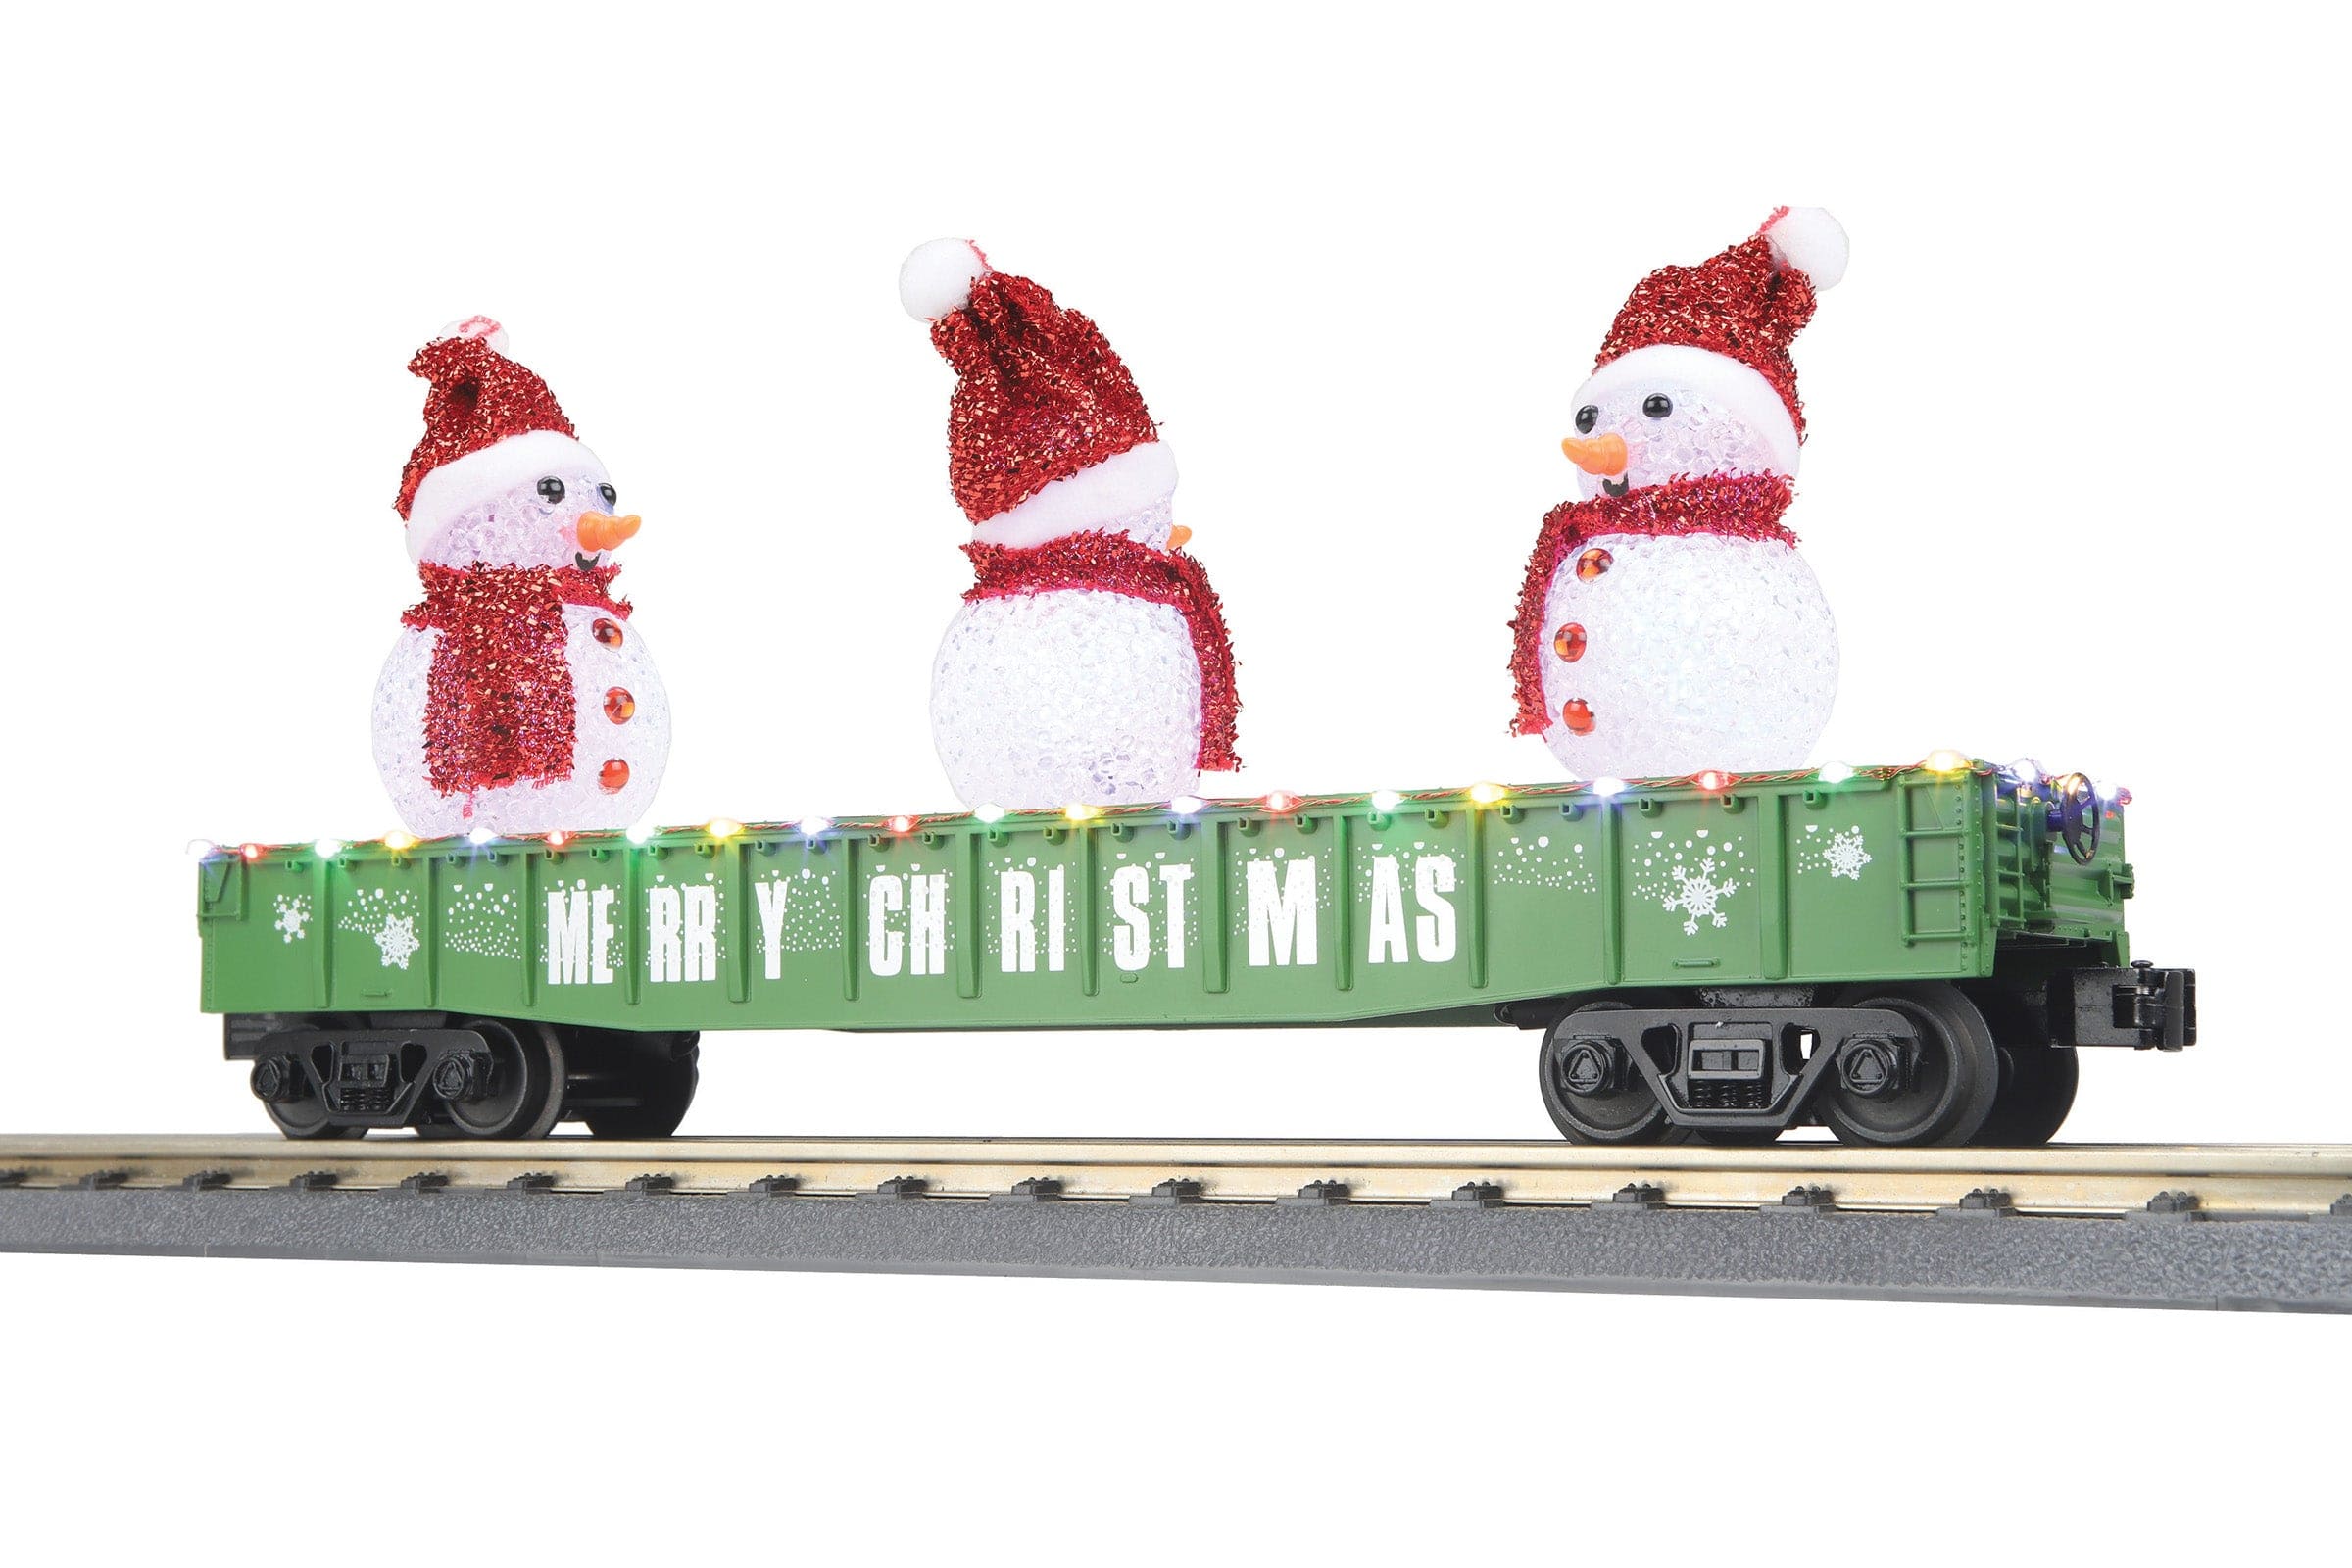 MTH 30-72229 - Gondola Car "Christmas" #1225 w/ LED Lights & Lighted Snowman (Green)